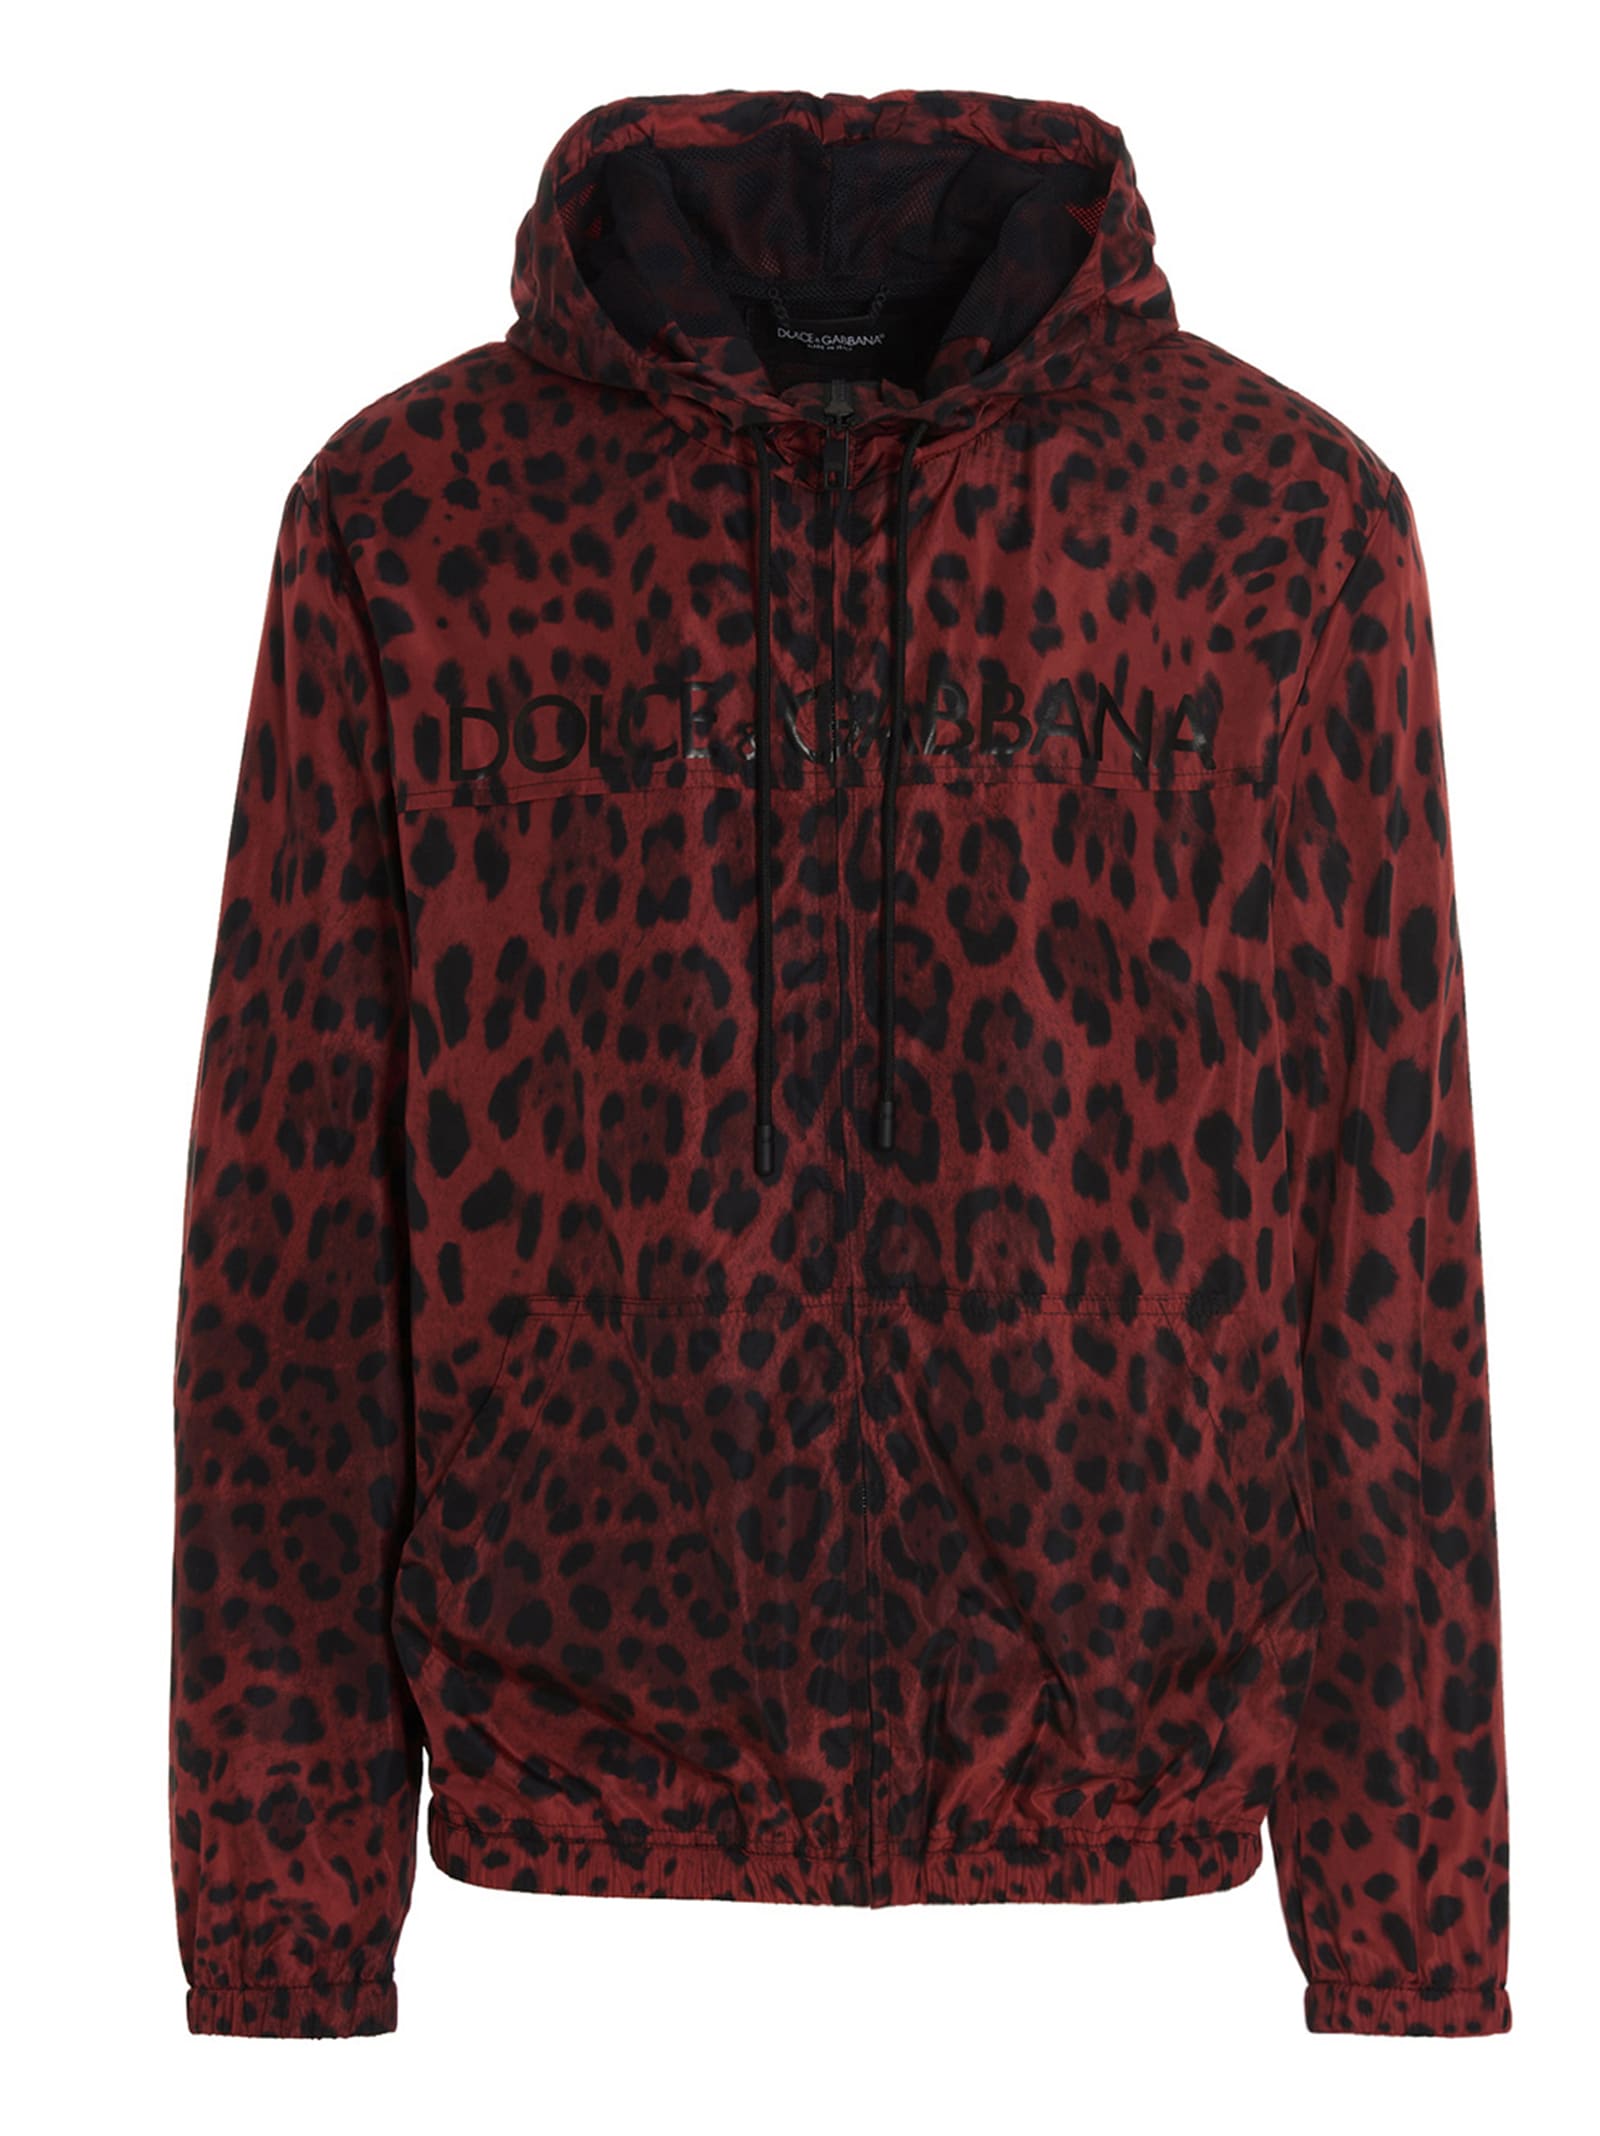 Dolce & Gabbana Hot Animalier Jacket